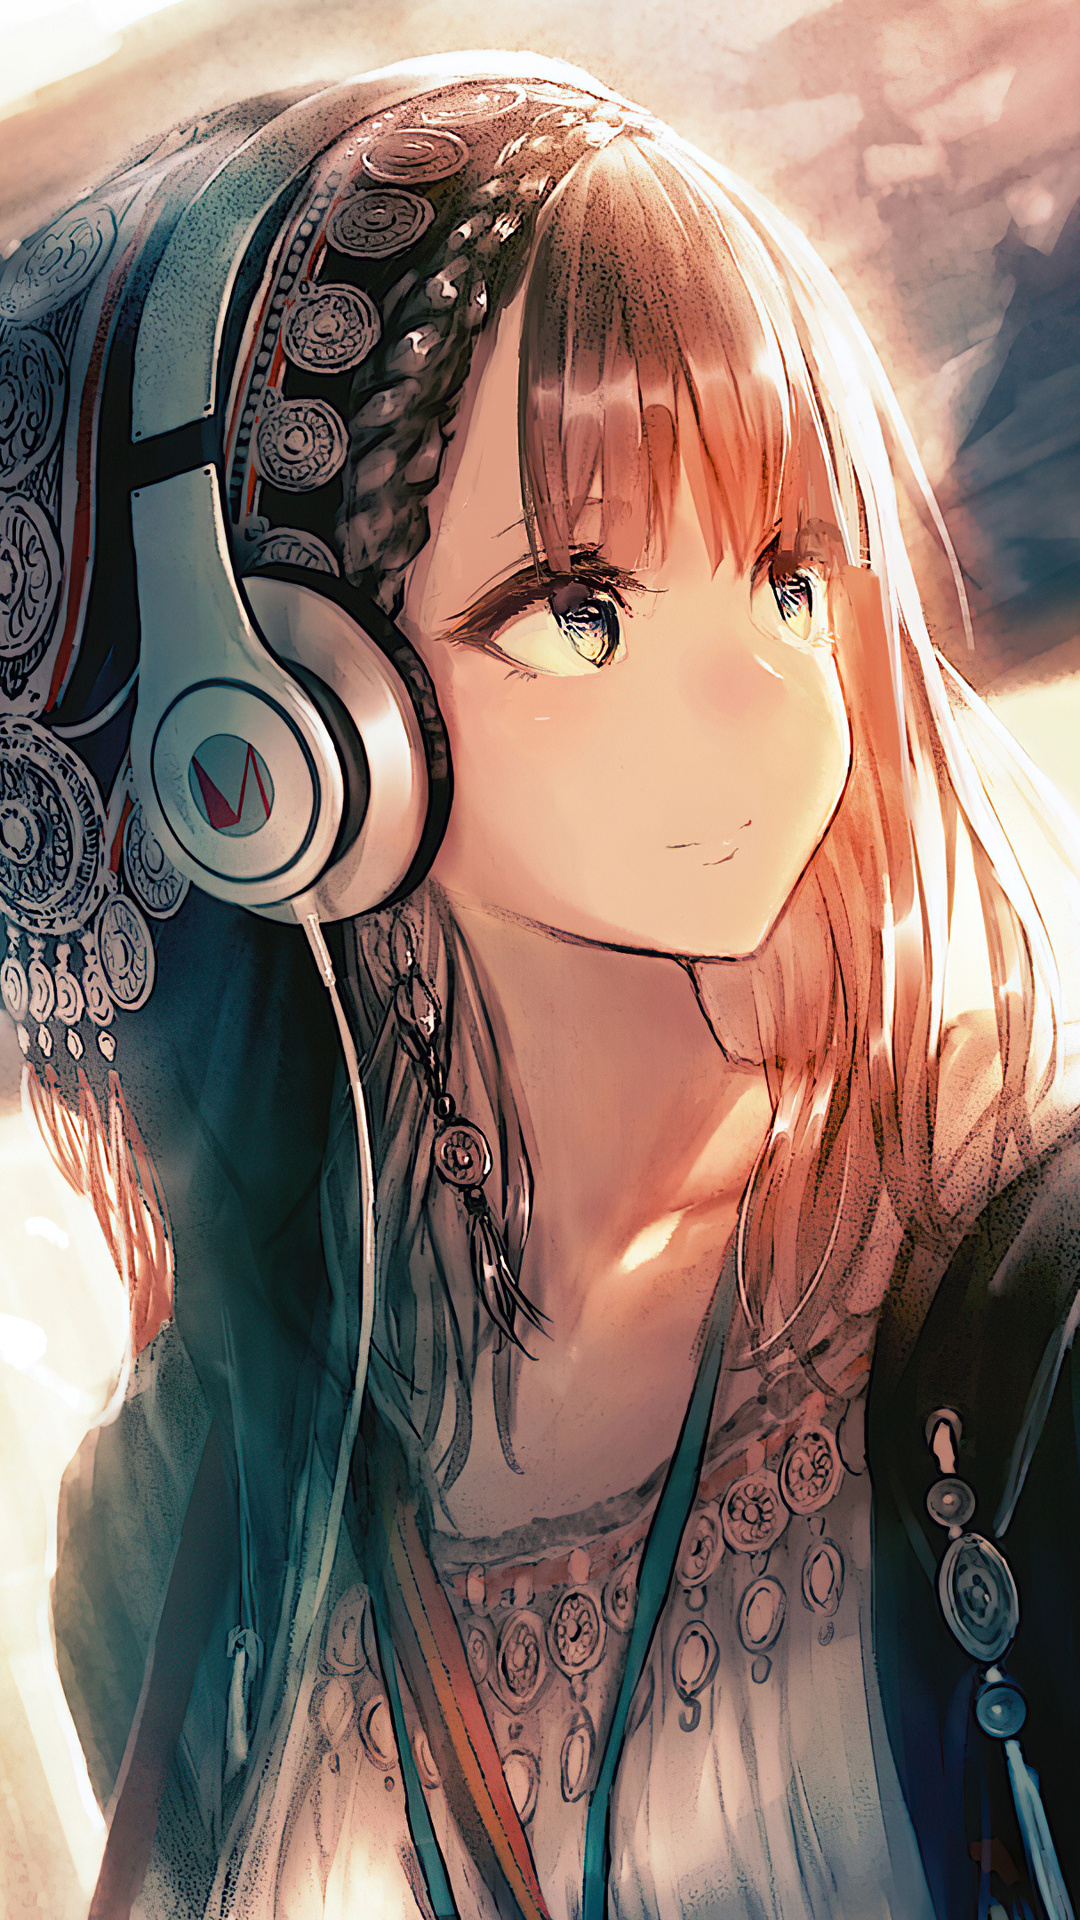 1080x1920-anime-girl-headphones-looking-away-4k-iphone-7-6s-6-plus